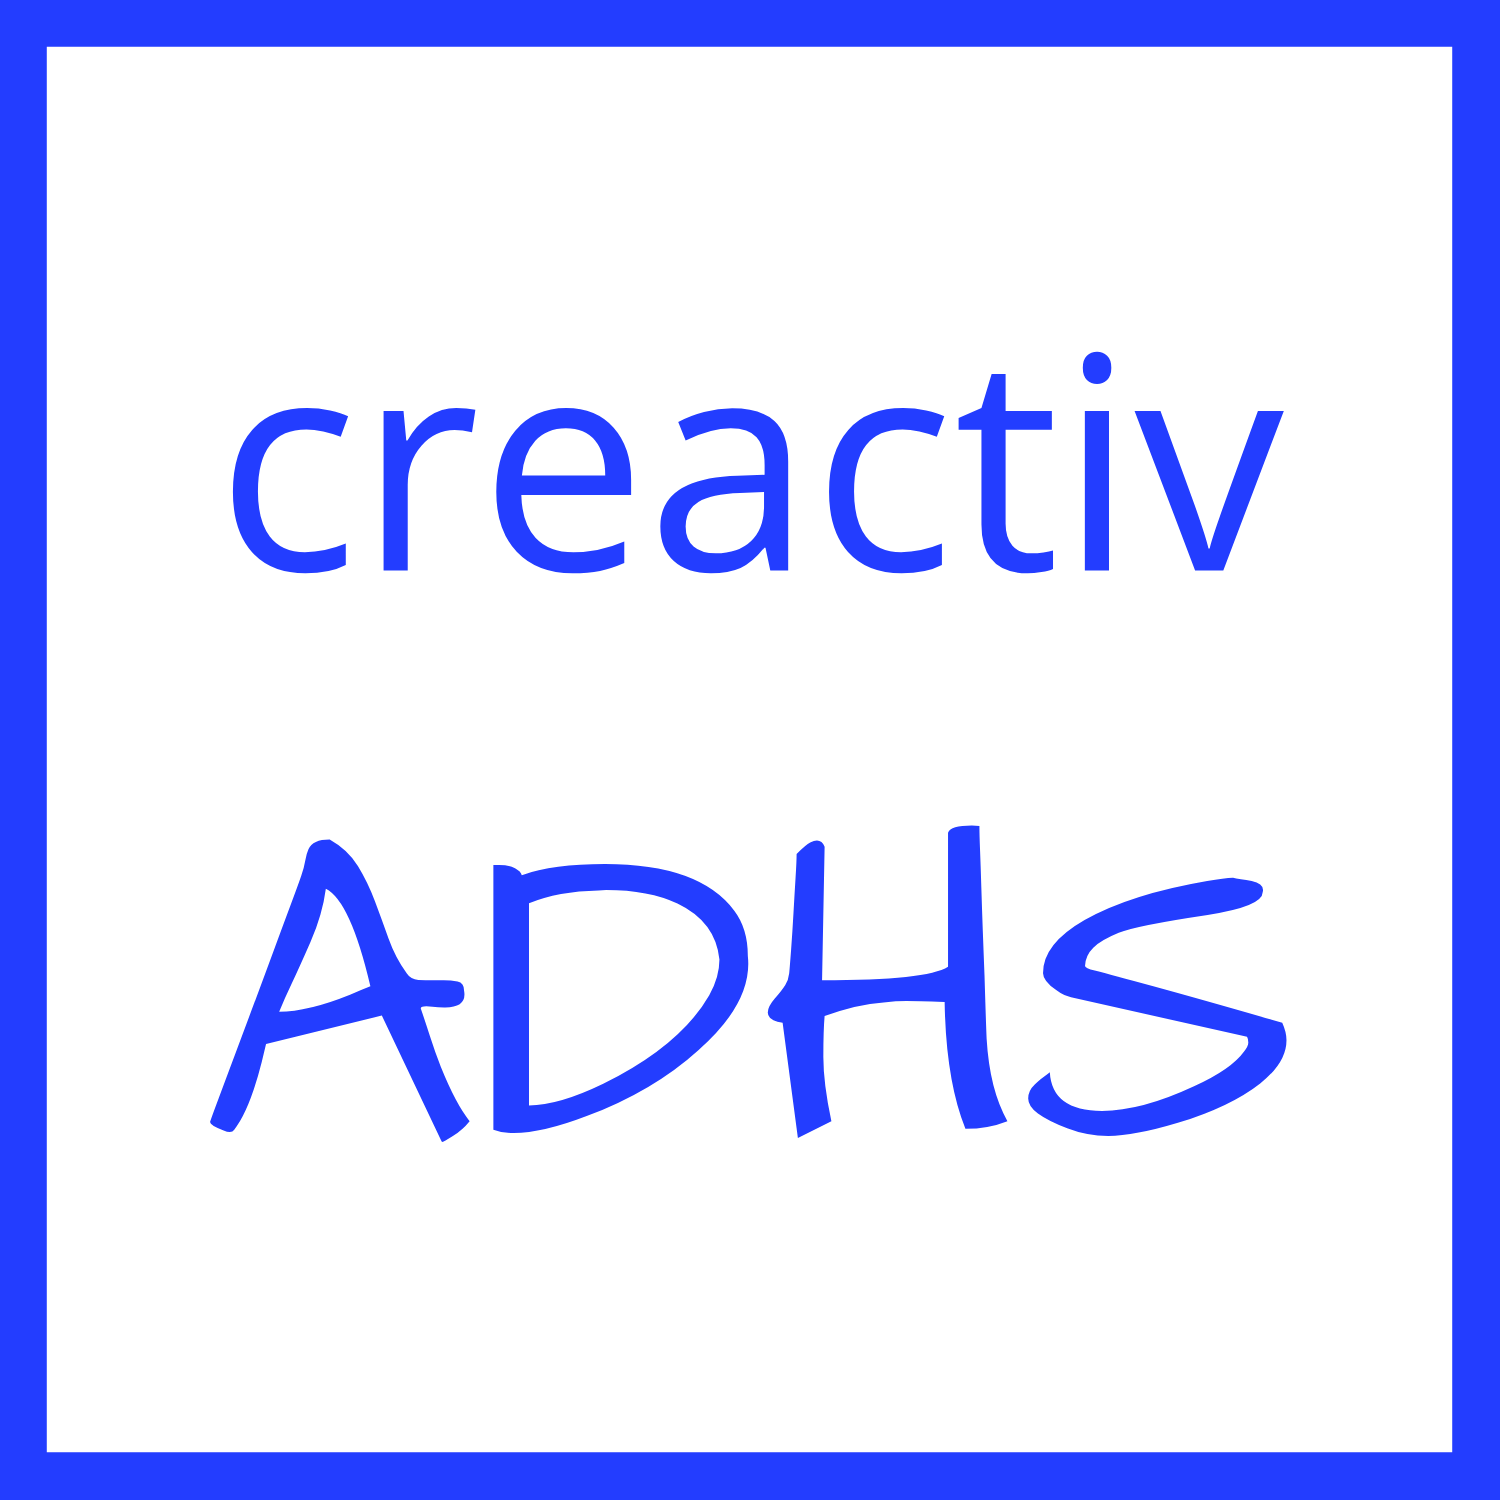 creactiv-adhs